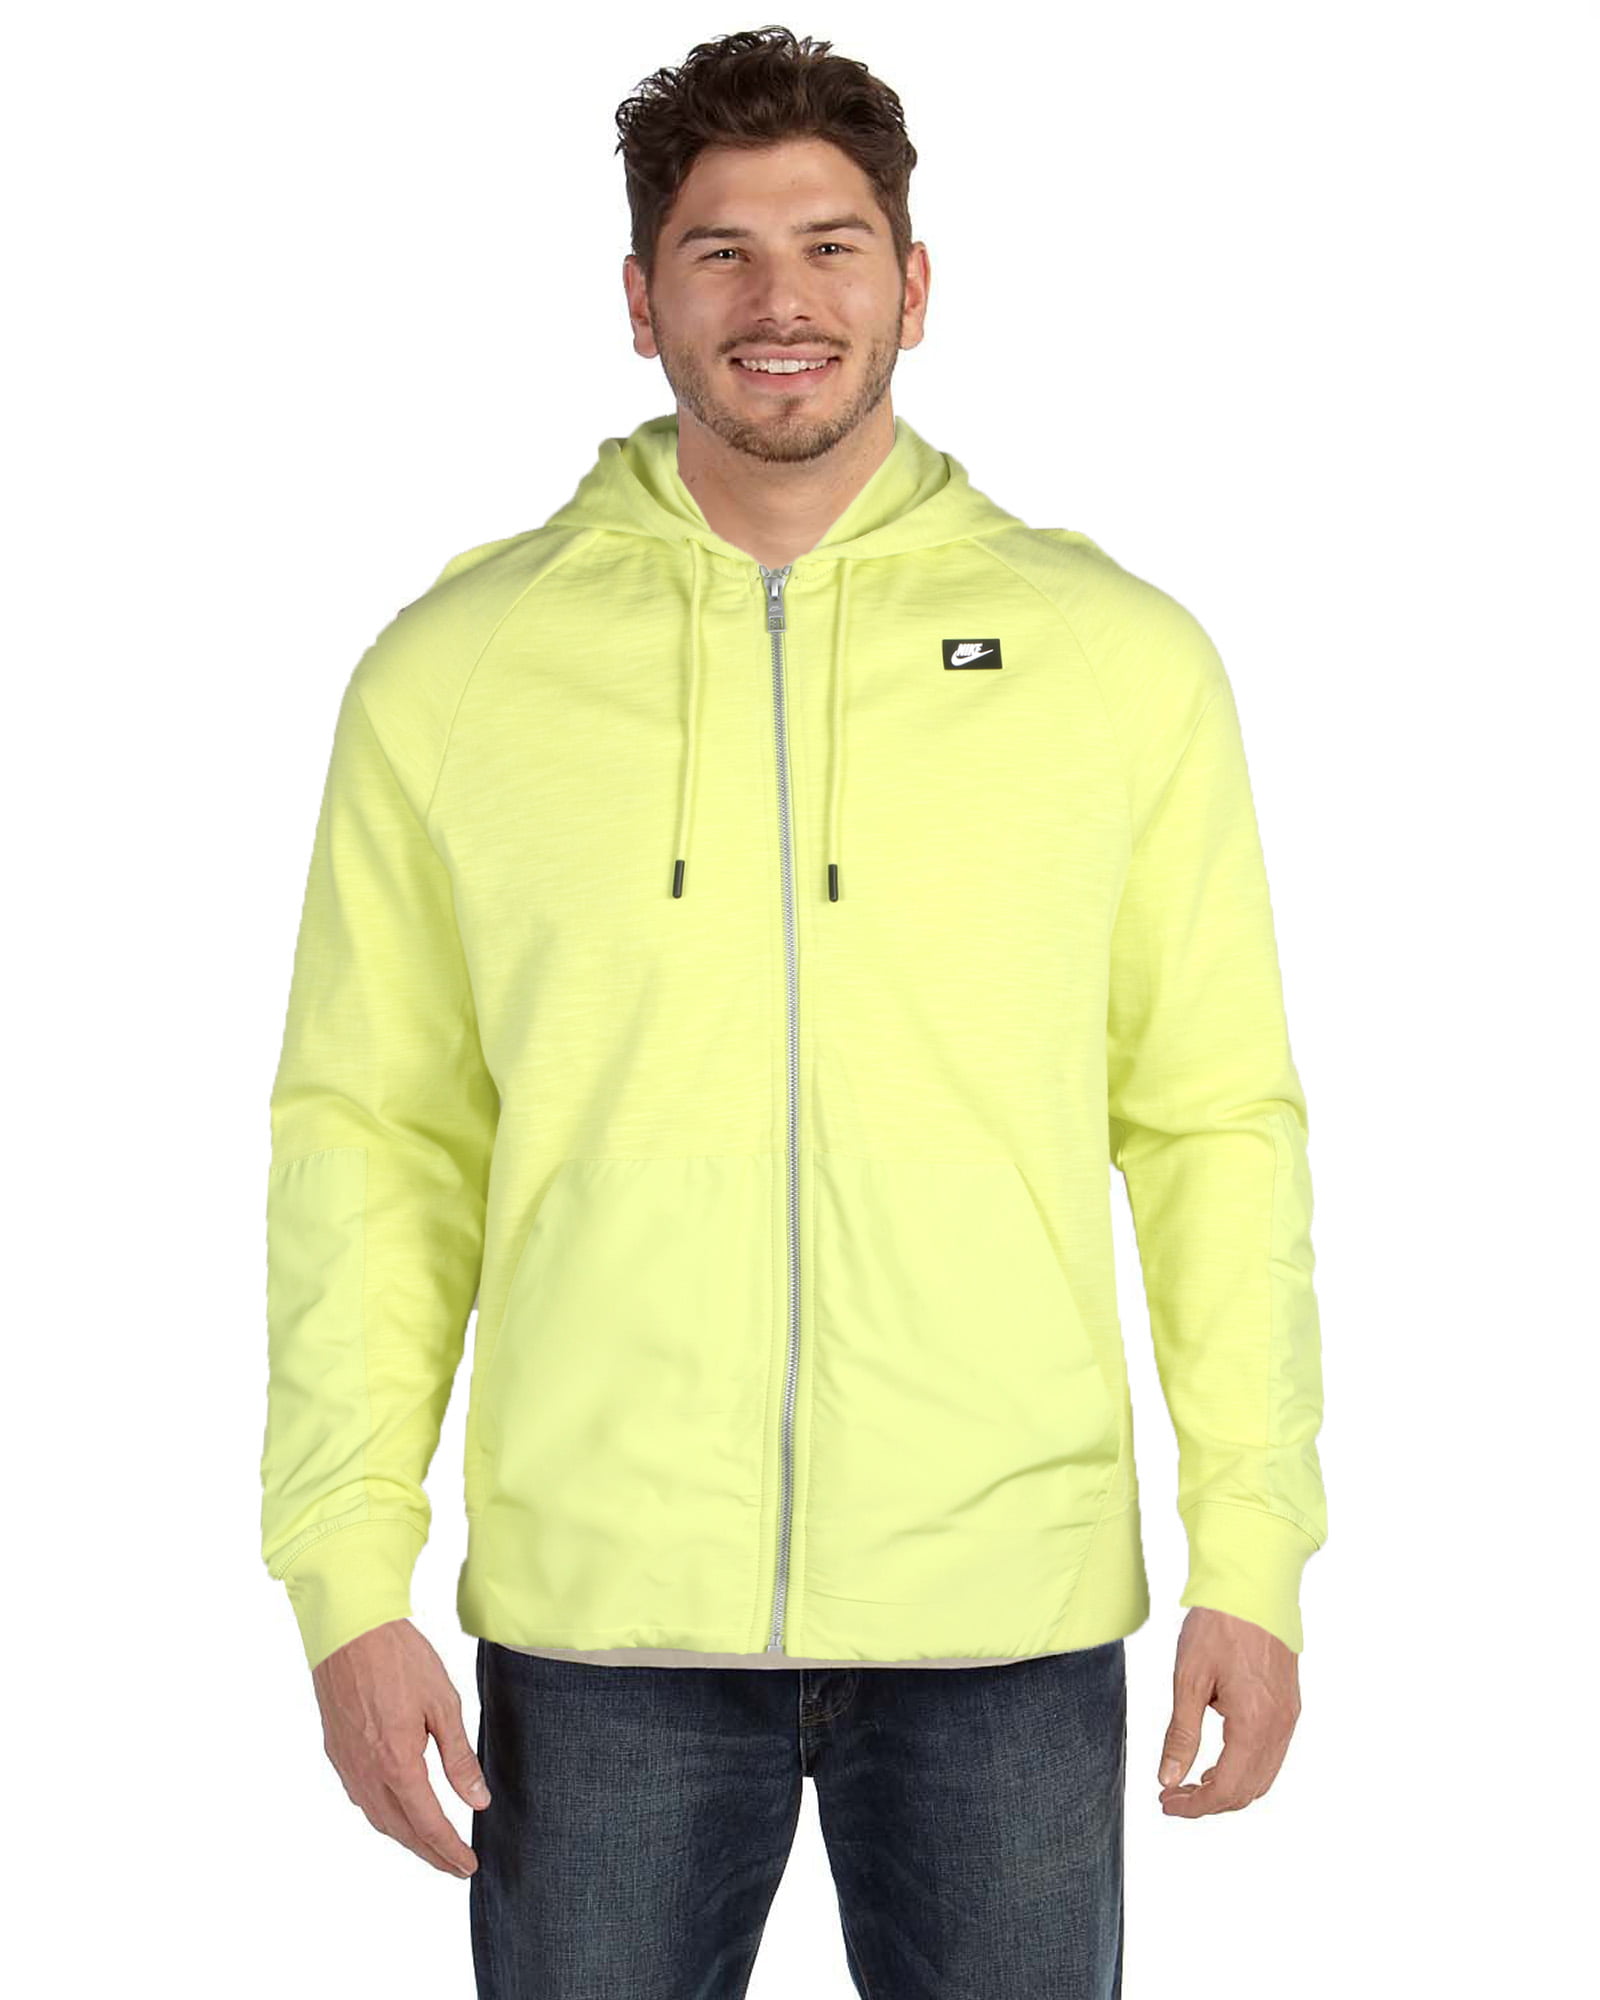 Men's Sportwear Lightweight Zip Hoodie (Lime X-Large) - Walmart.com